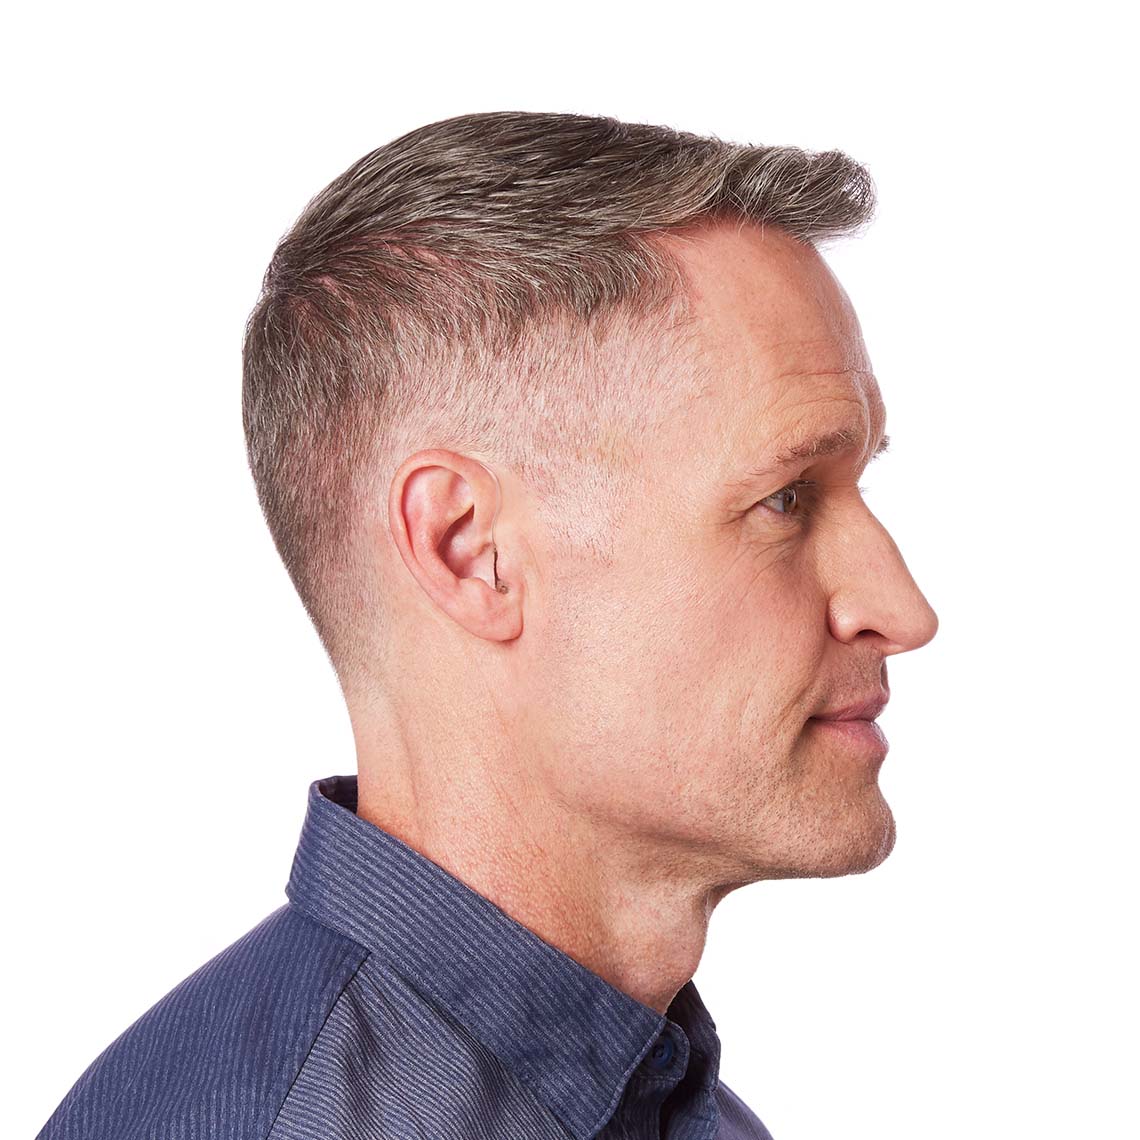 A RIC 312 AP shown on a man's ear